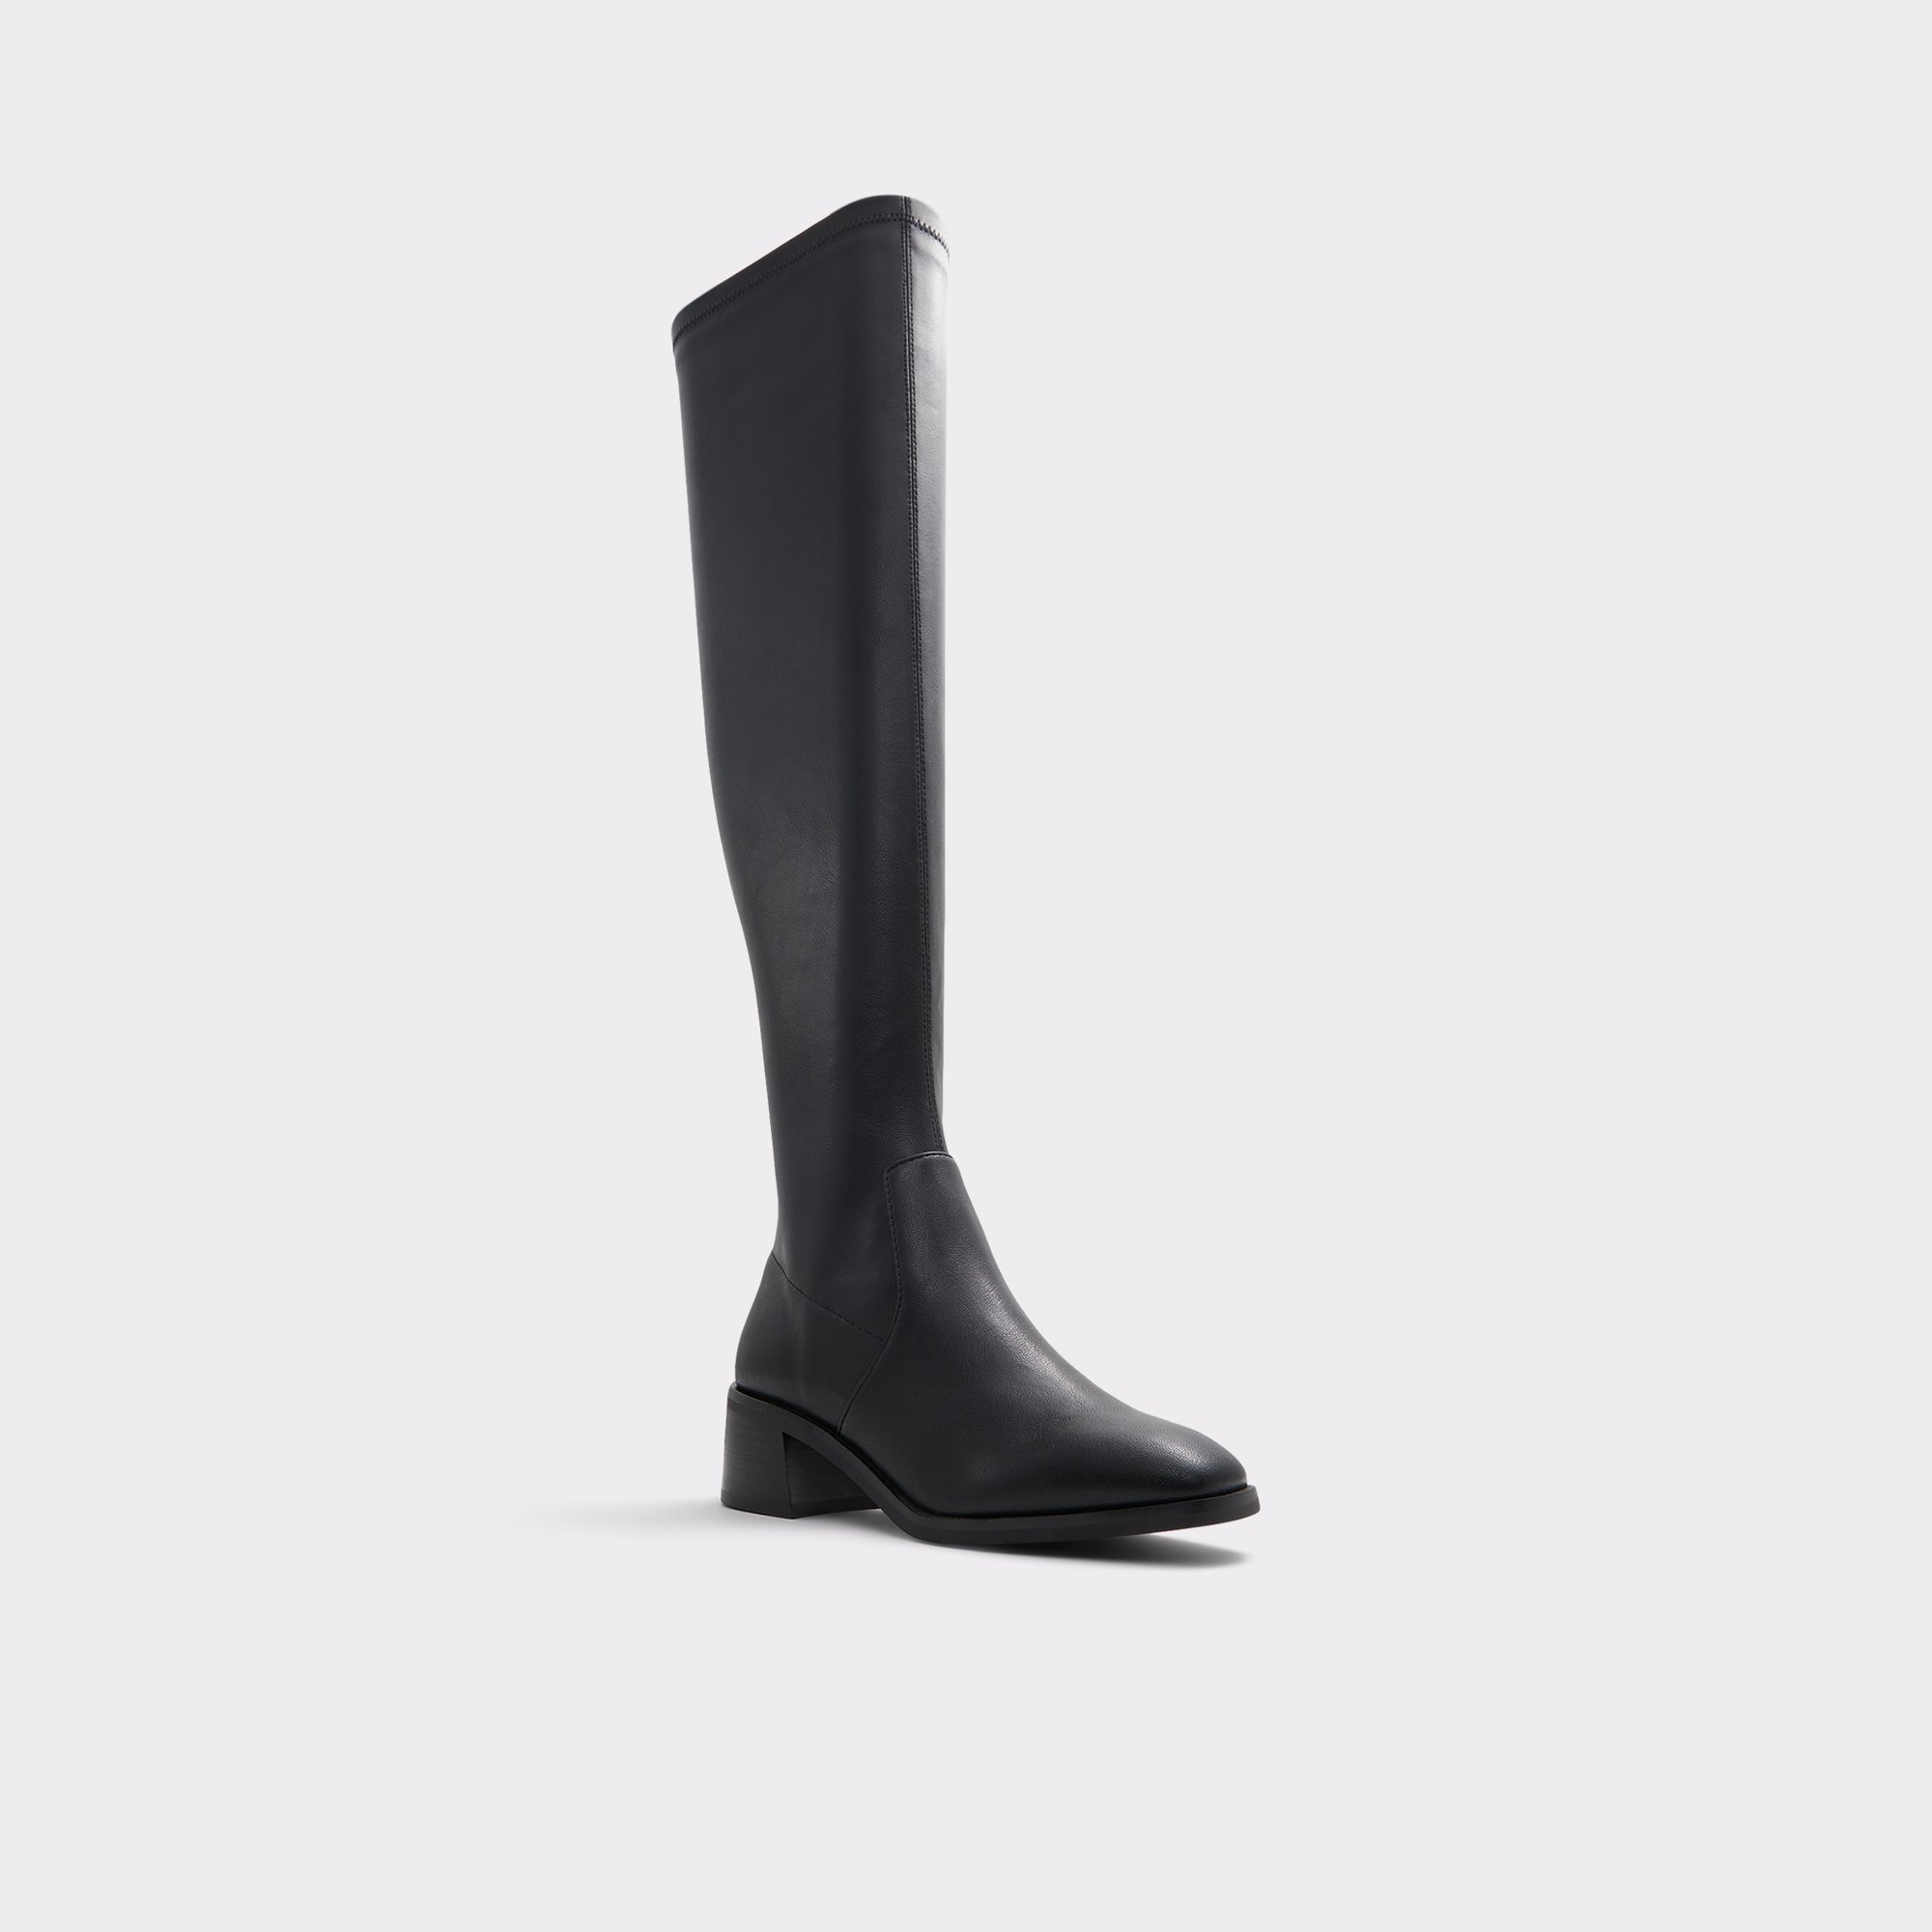 Miralemas Black Women's Tall Boots | ALDO Canada